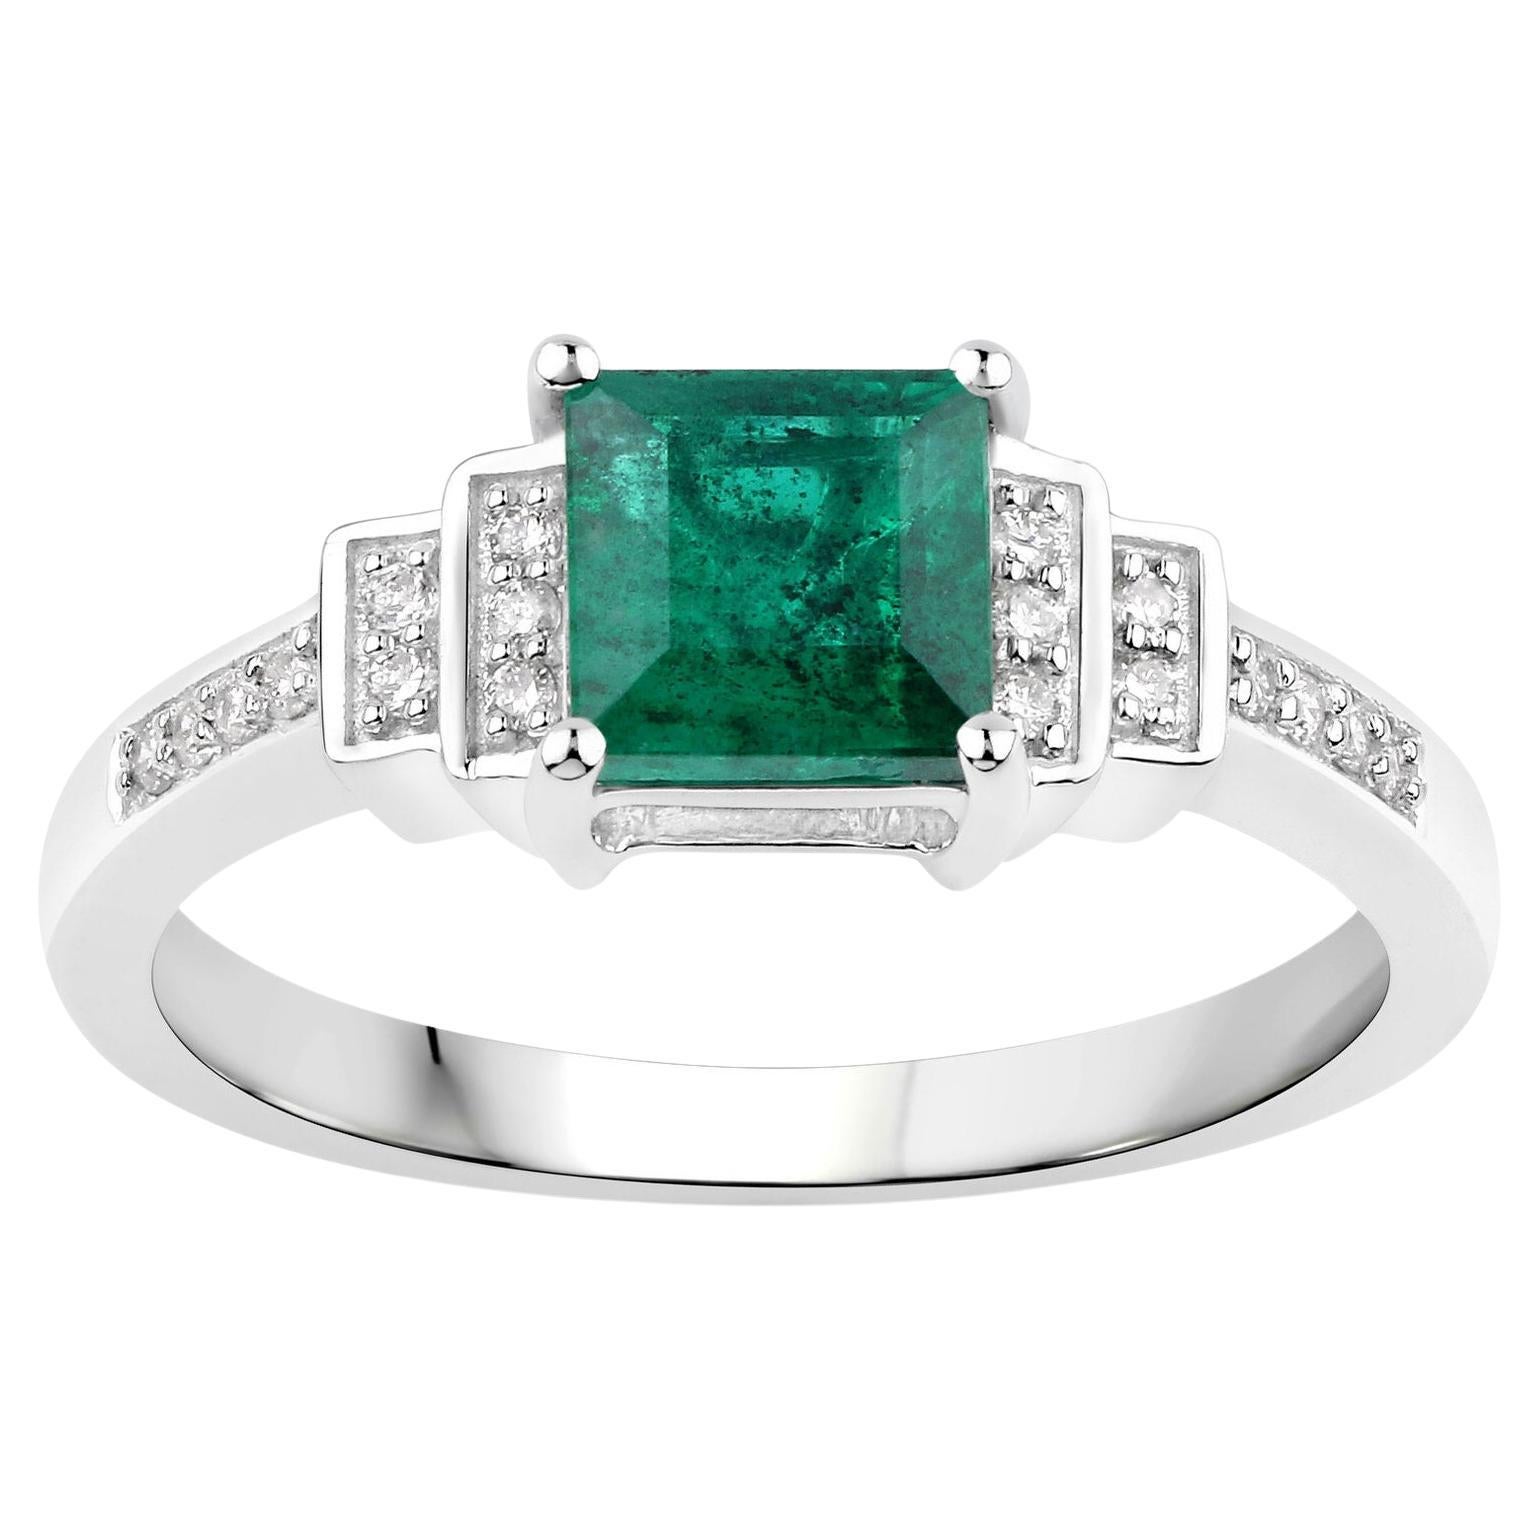 Natural Zambian Princess Cut Emerald Ring Diamond Setting 14K White Gold For Sale